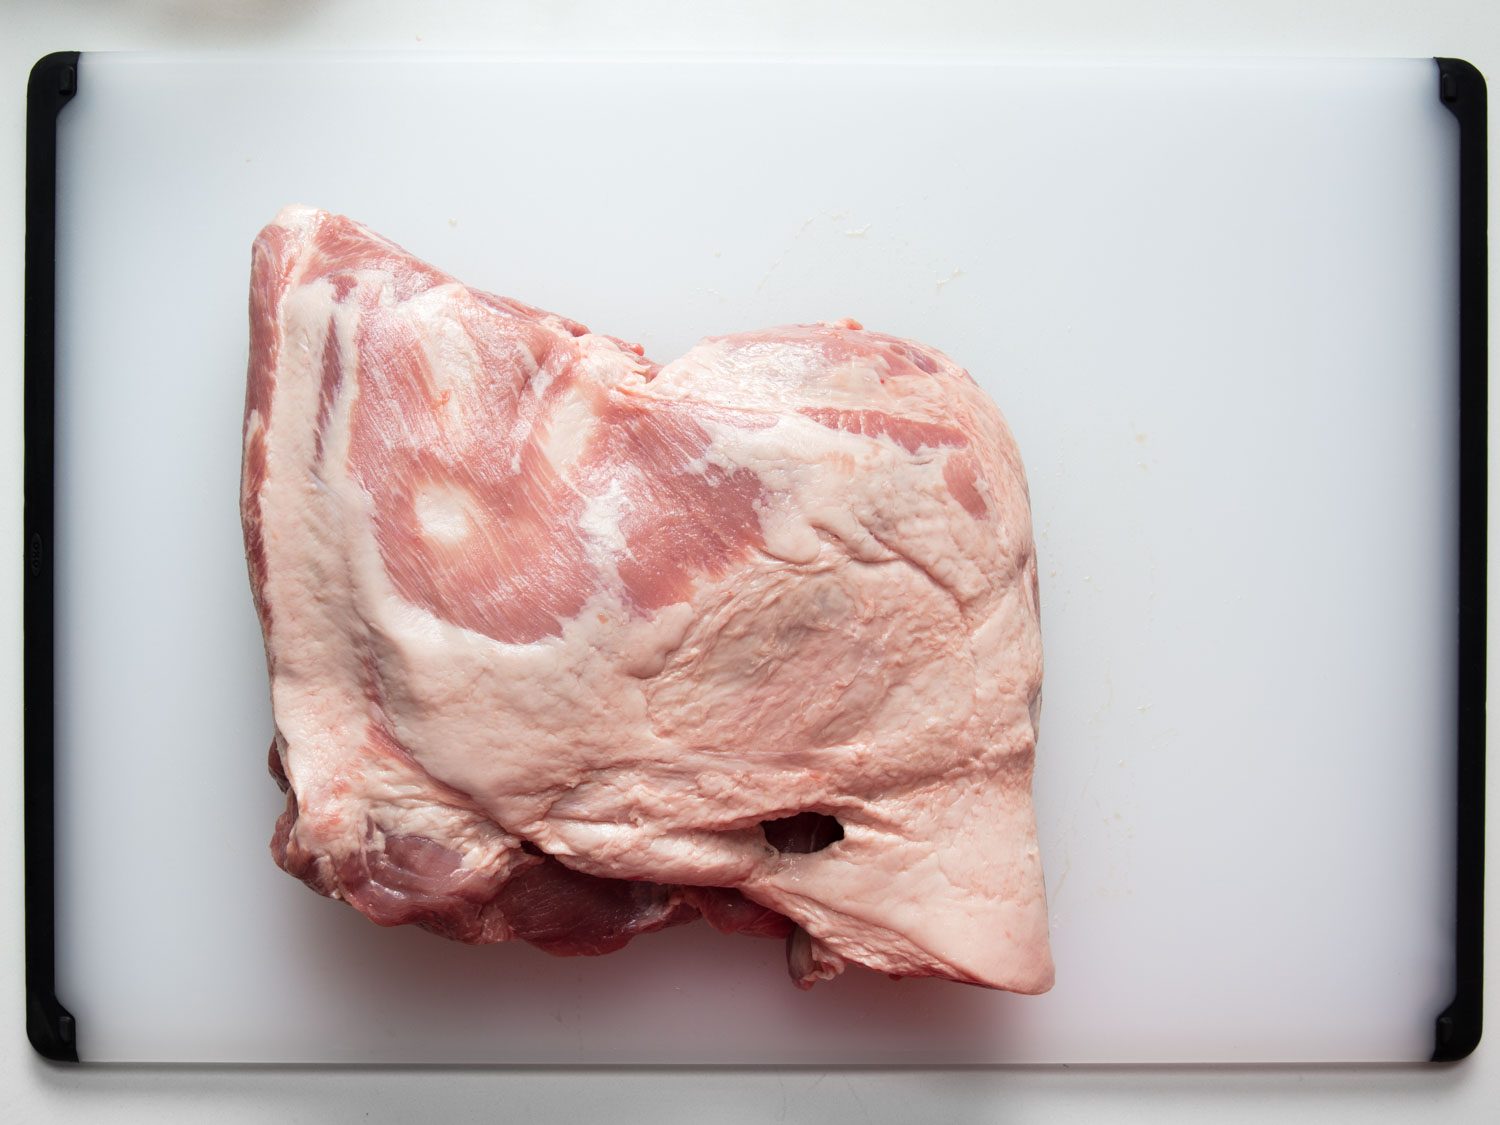 Overhead view of boneless skinless pork shoulder